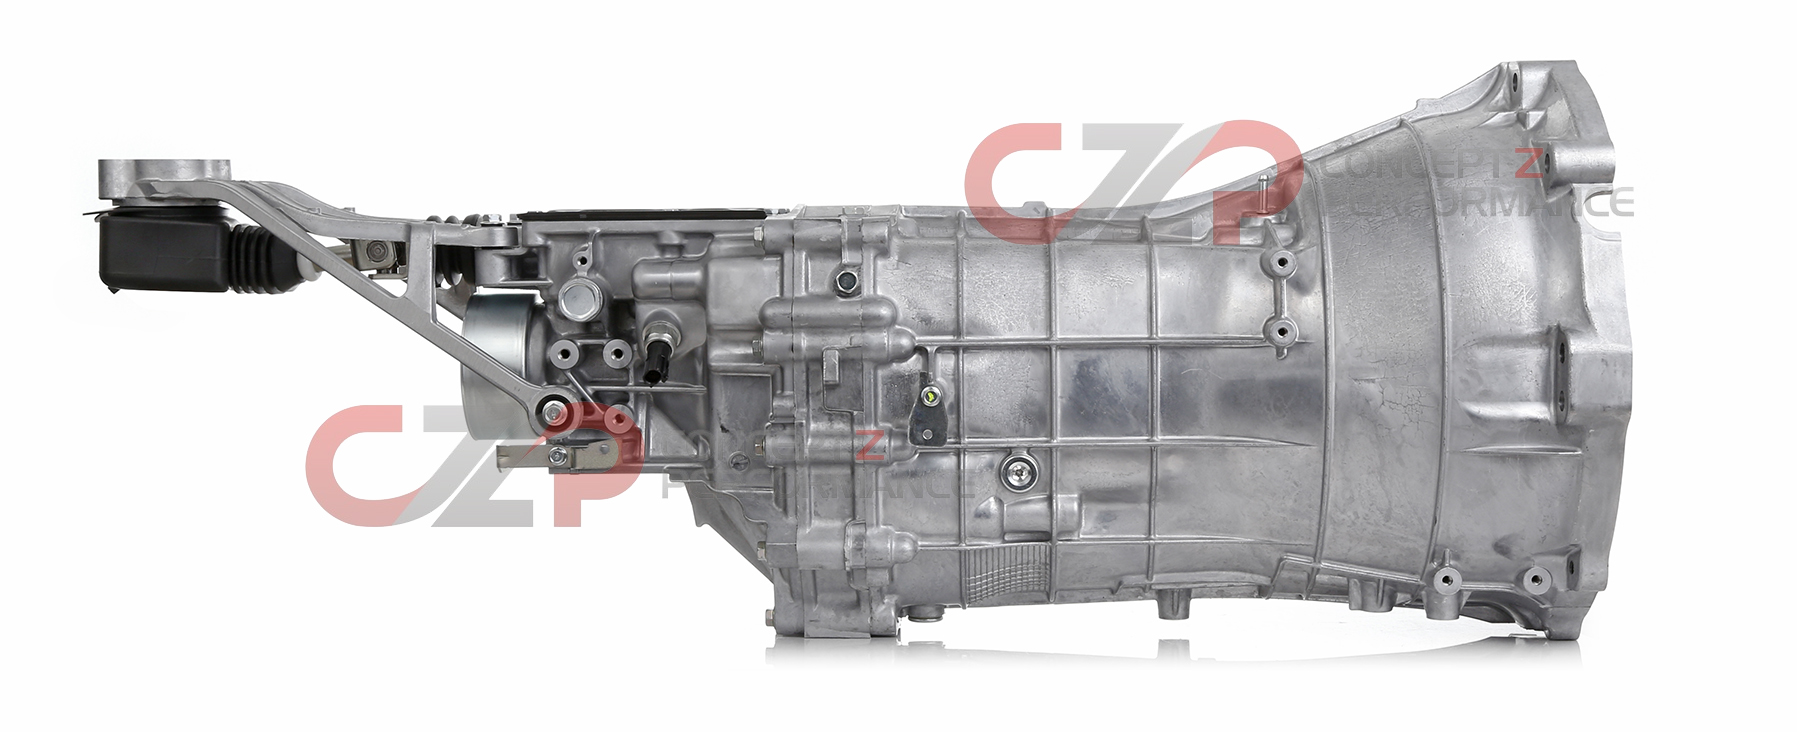 Infiniti OEM Manual Transmission Assembly - Infiniti G35 07-08, G37 09-14 & Q40 2015 Sedan V36 / G37 08-13 & Q60 14-15 Coupe CV36